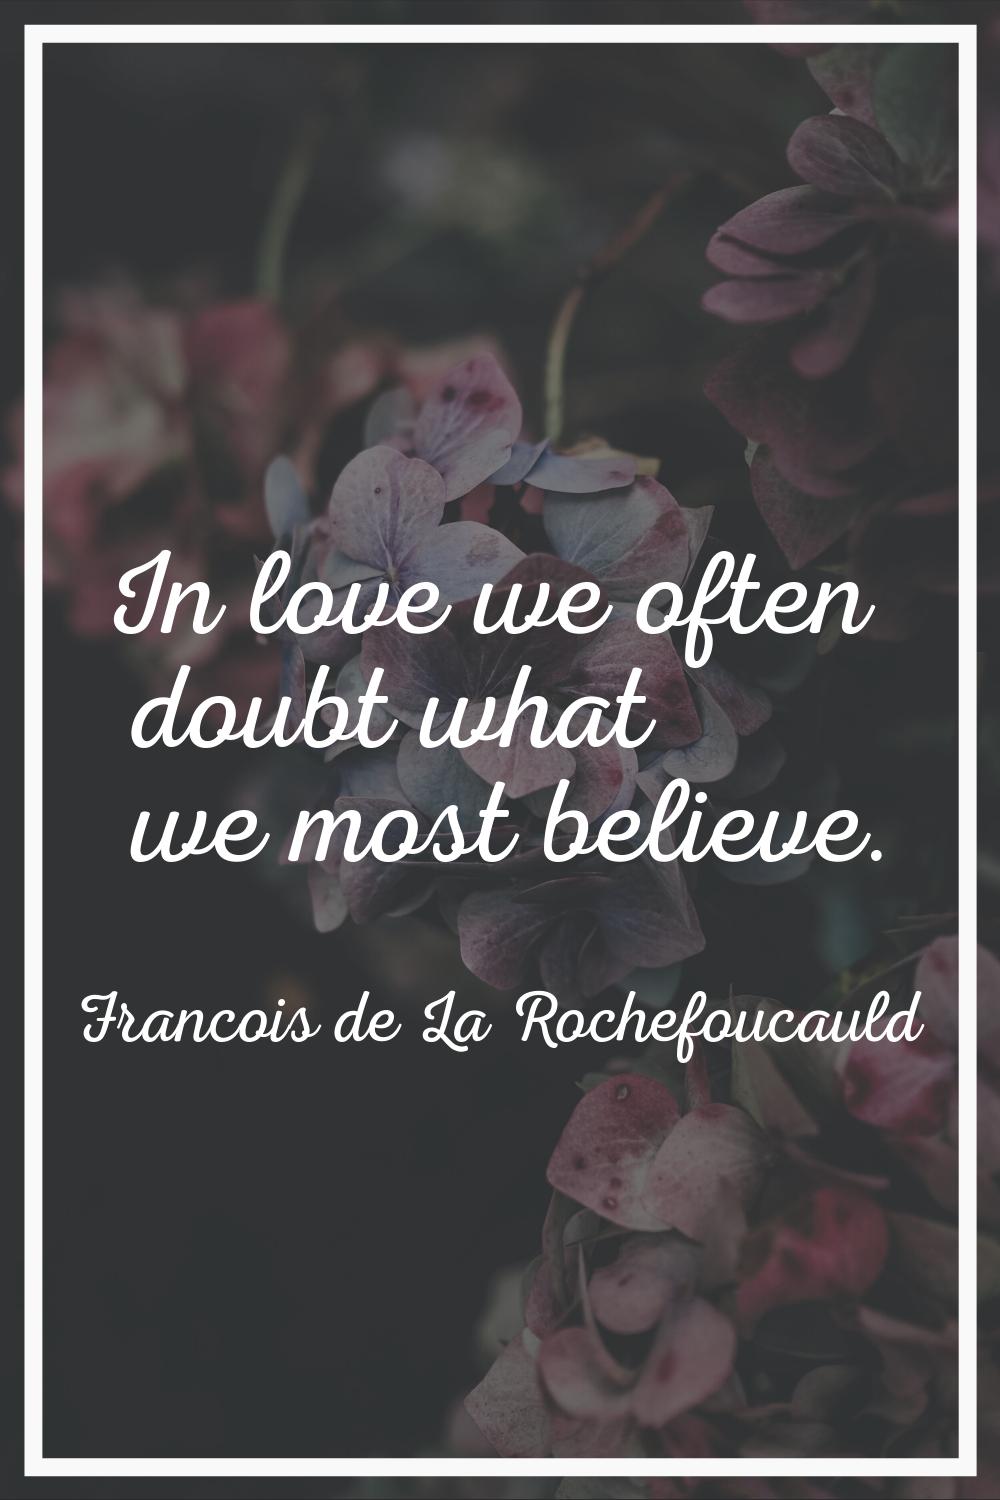 In love we often doubt what we most believe.